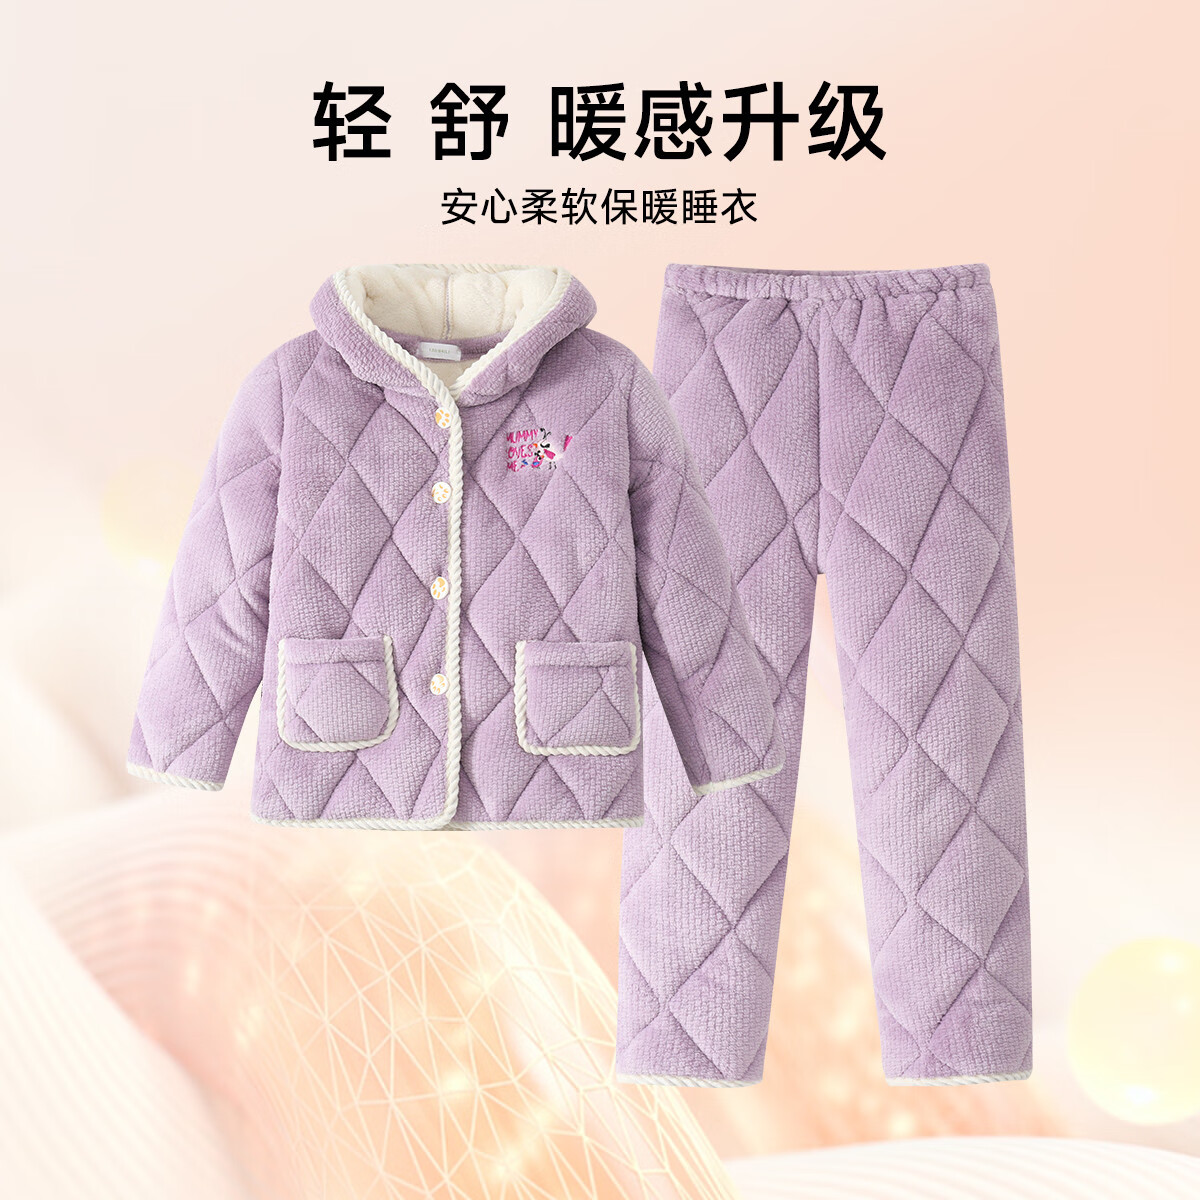 GOSO「三层夹棉加厚」儿童睡衣家居服套装 紫色 XL选购哪种好？3分钟了解评测报告！